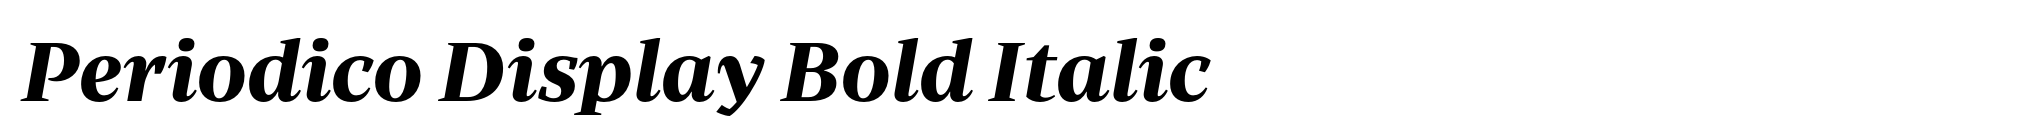 Periodico Display Bold Italic image